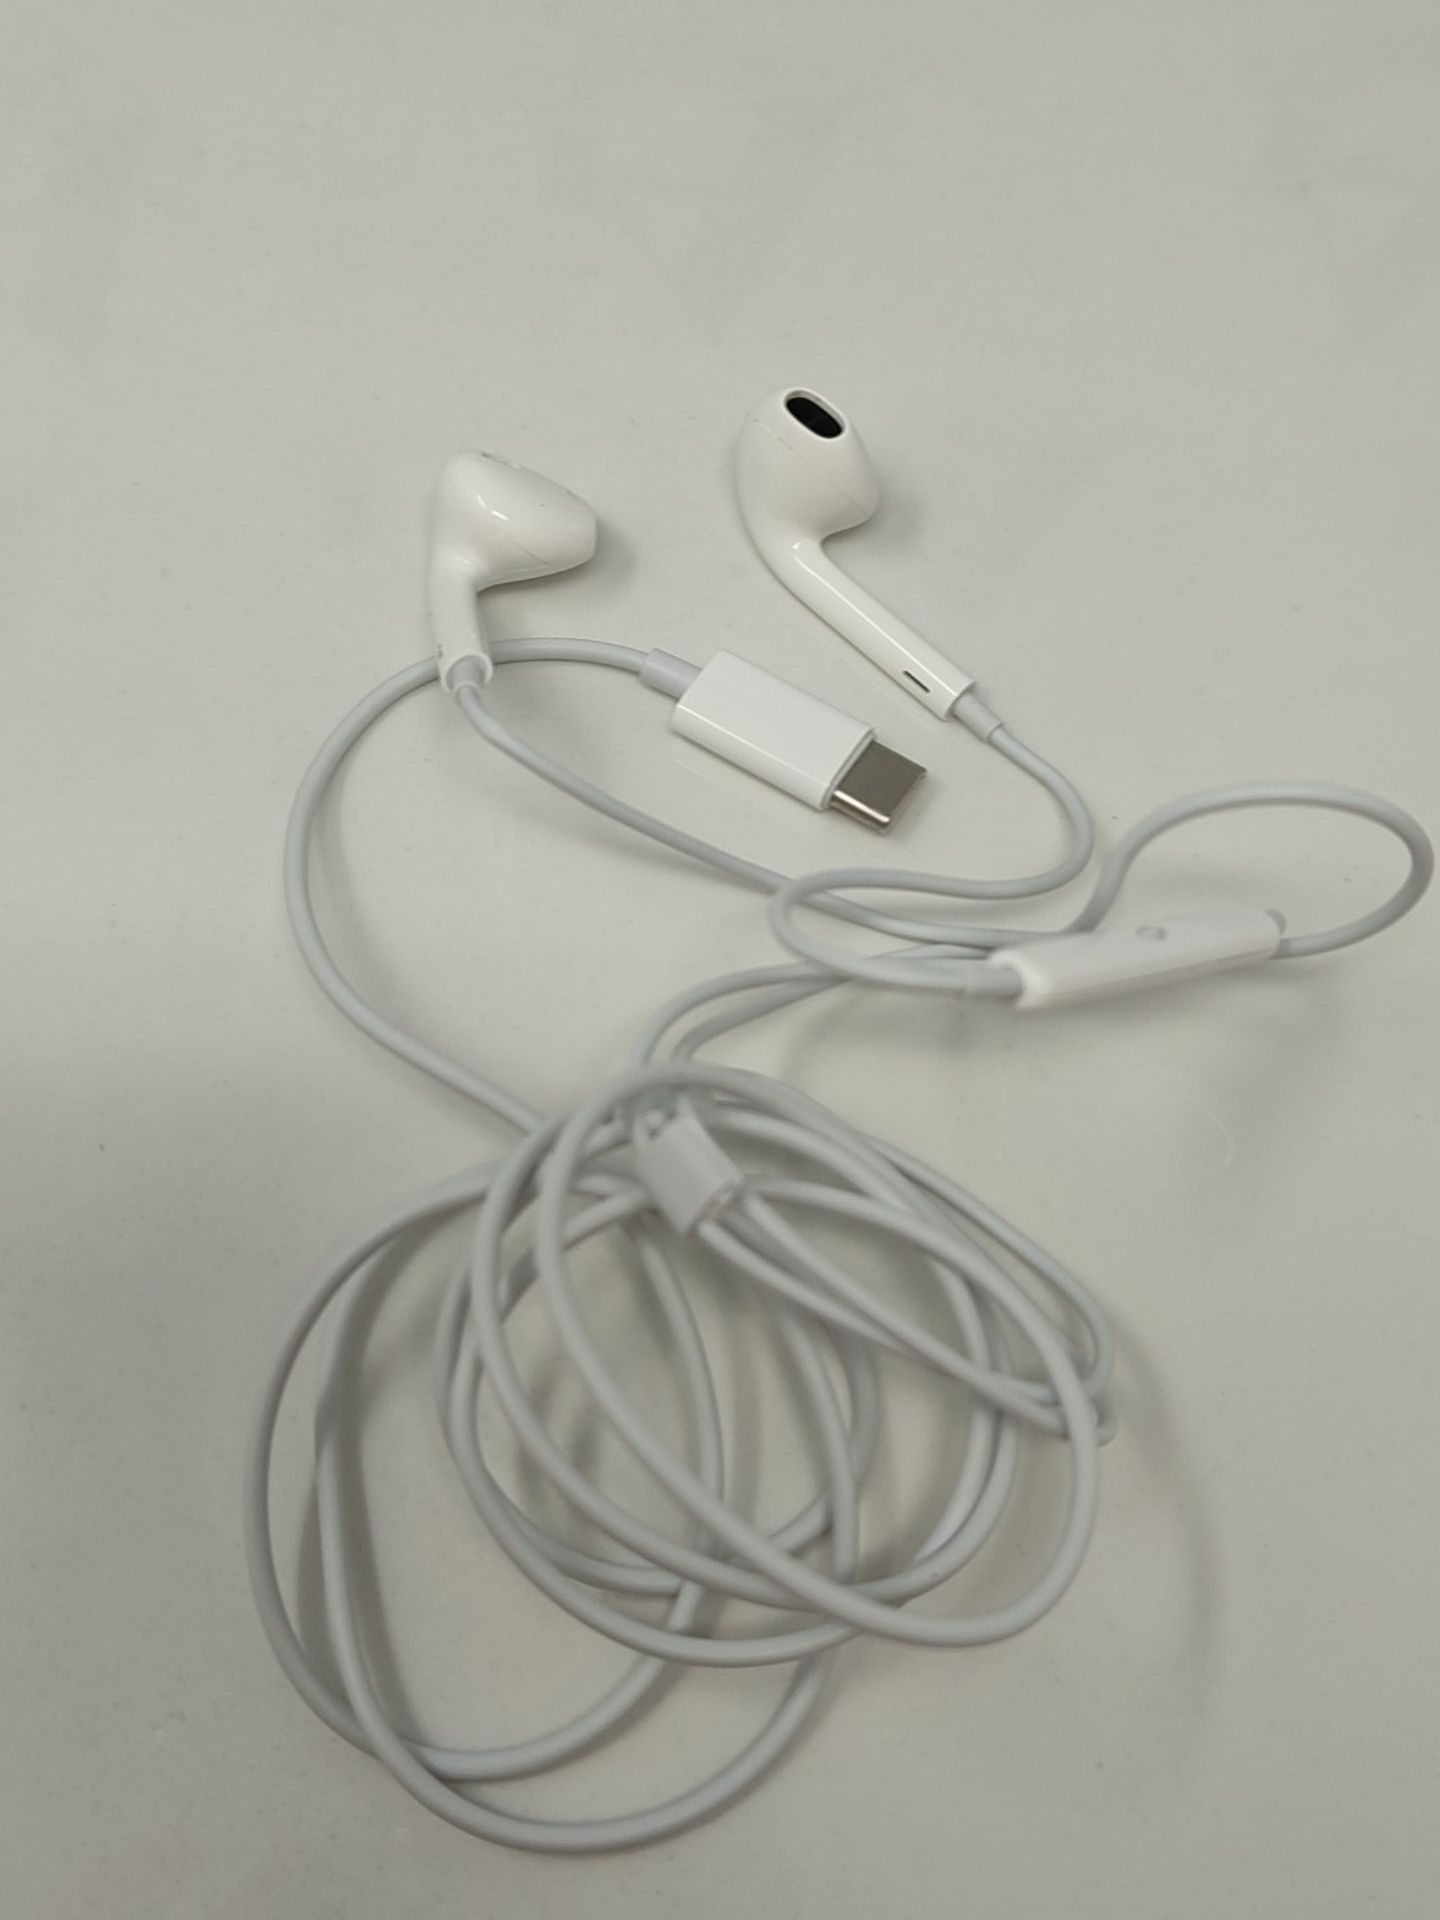 Apple EarPods (USB-C) - Image 3 of 3